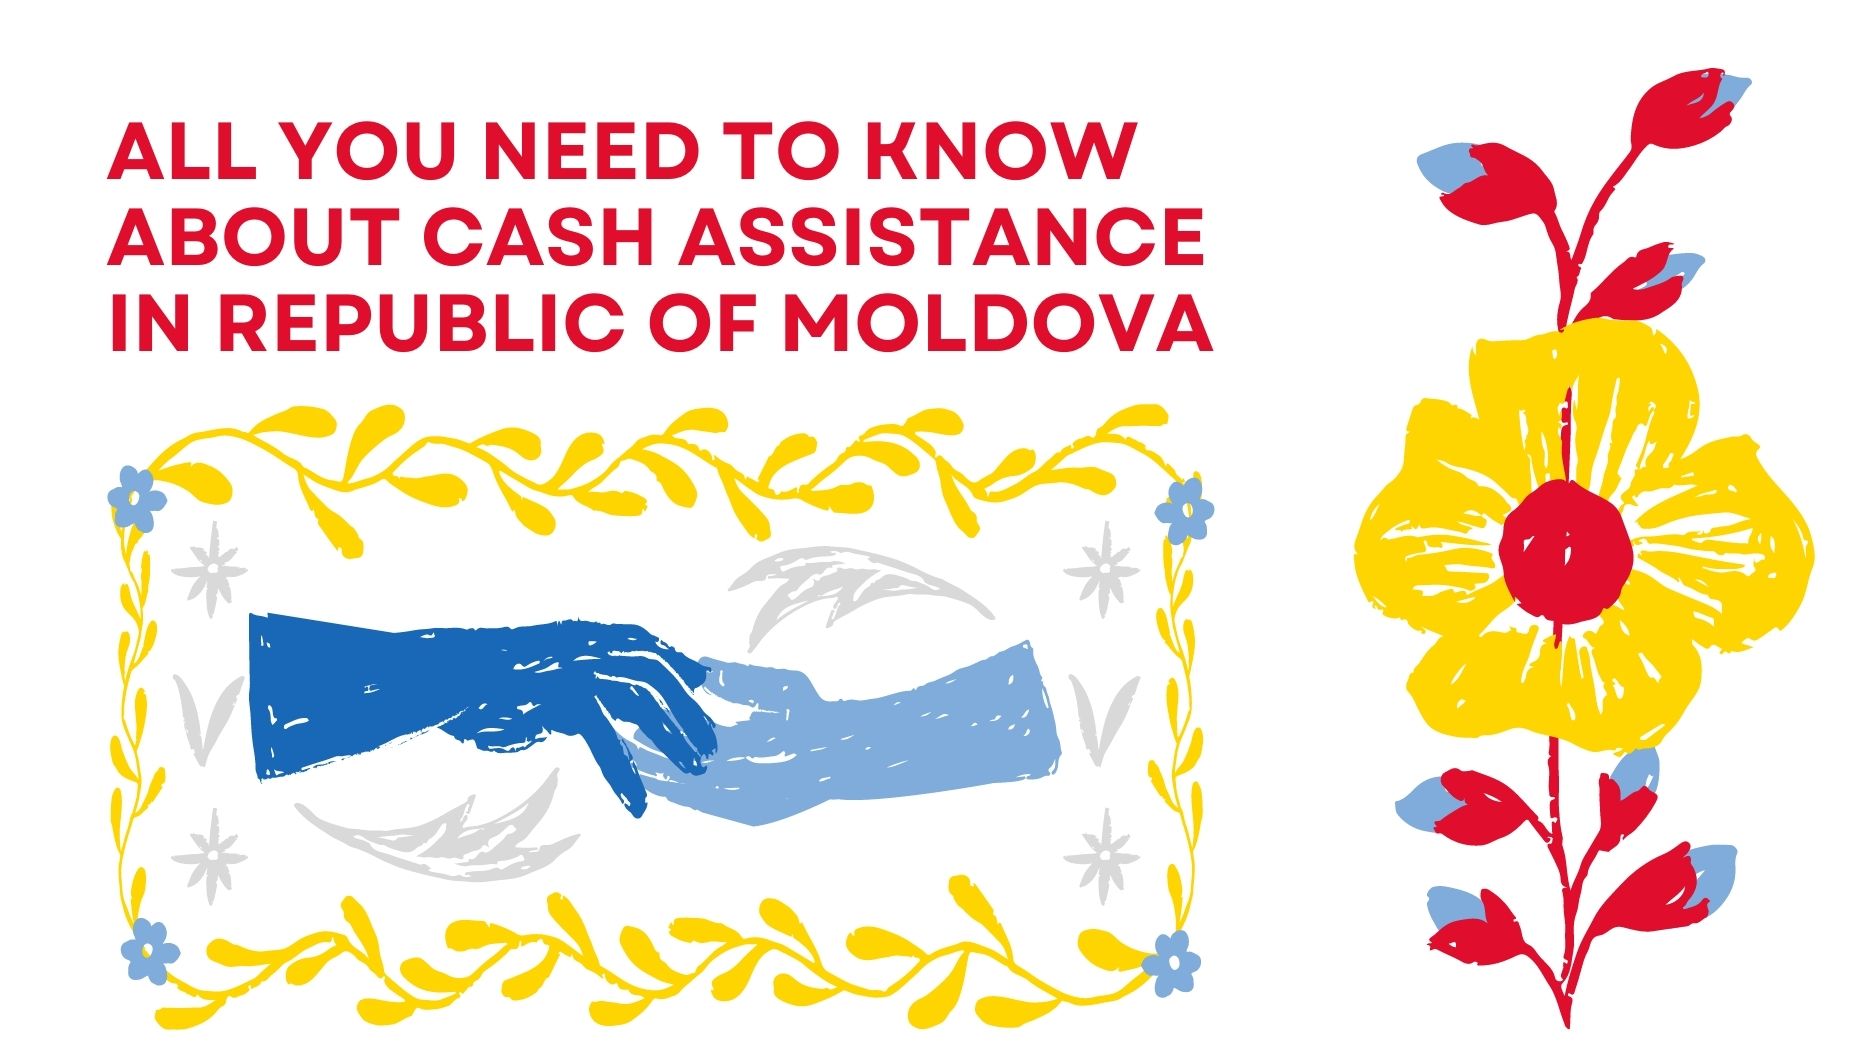 Caritas Moldova provides cash assistance to vulnerable refugees